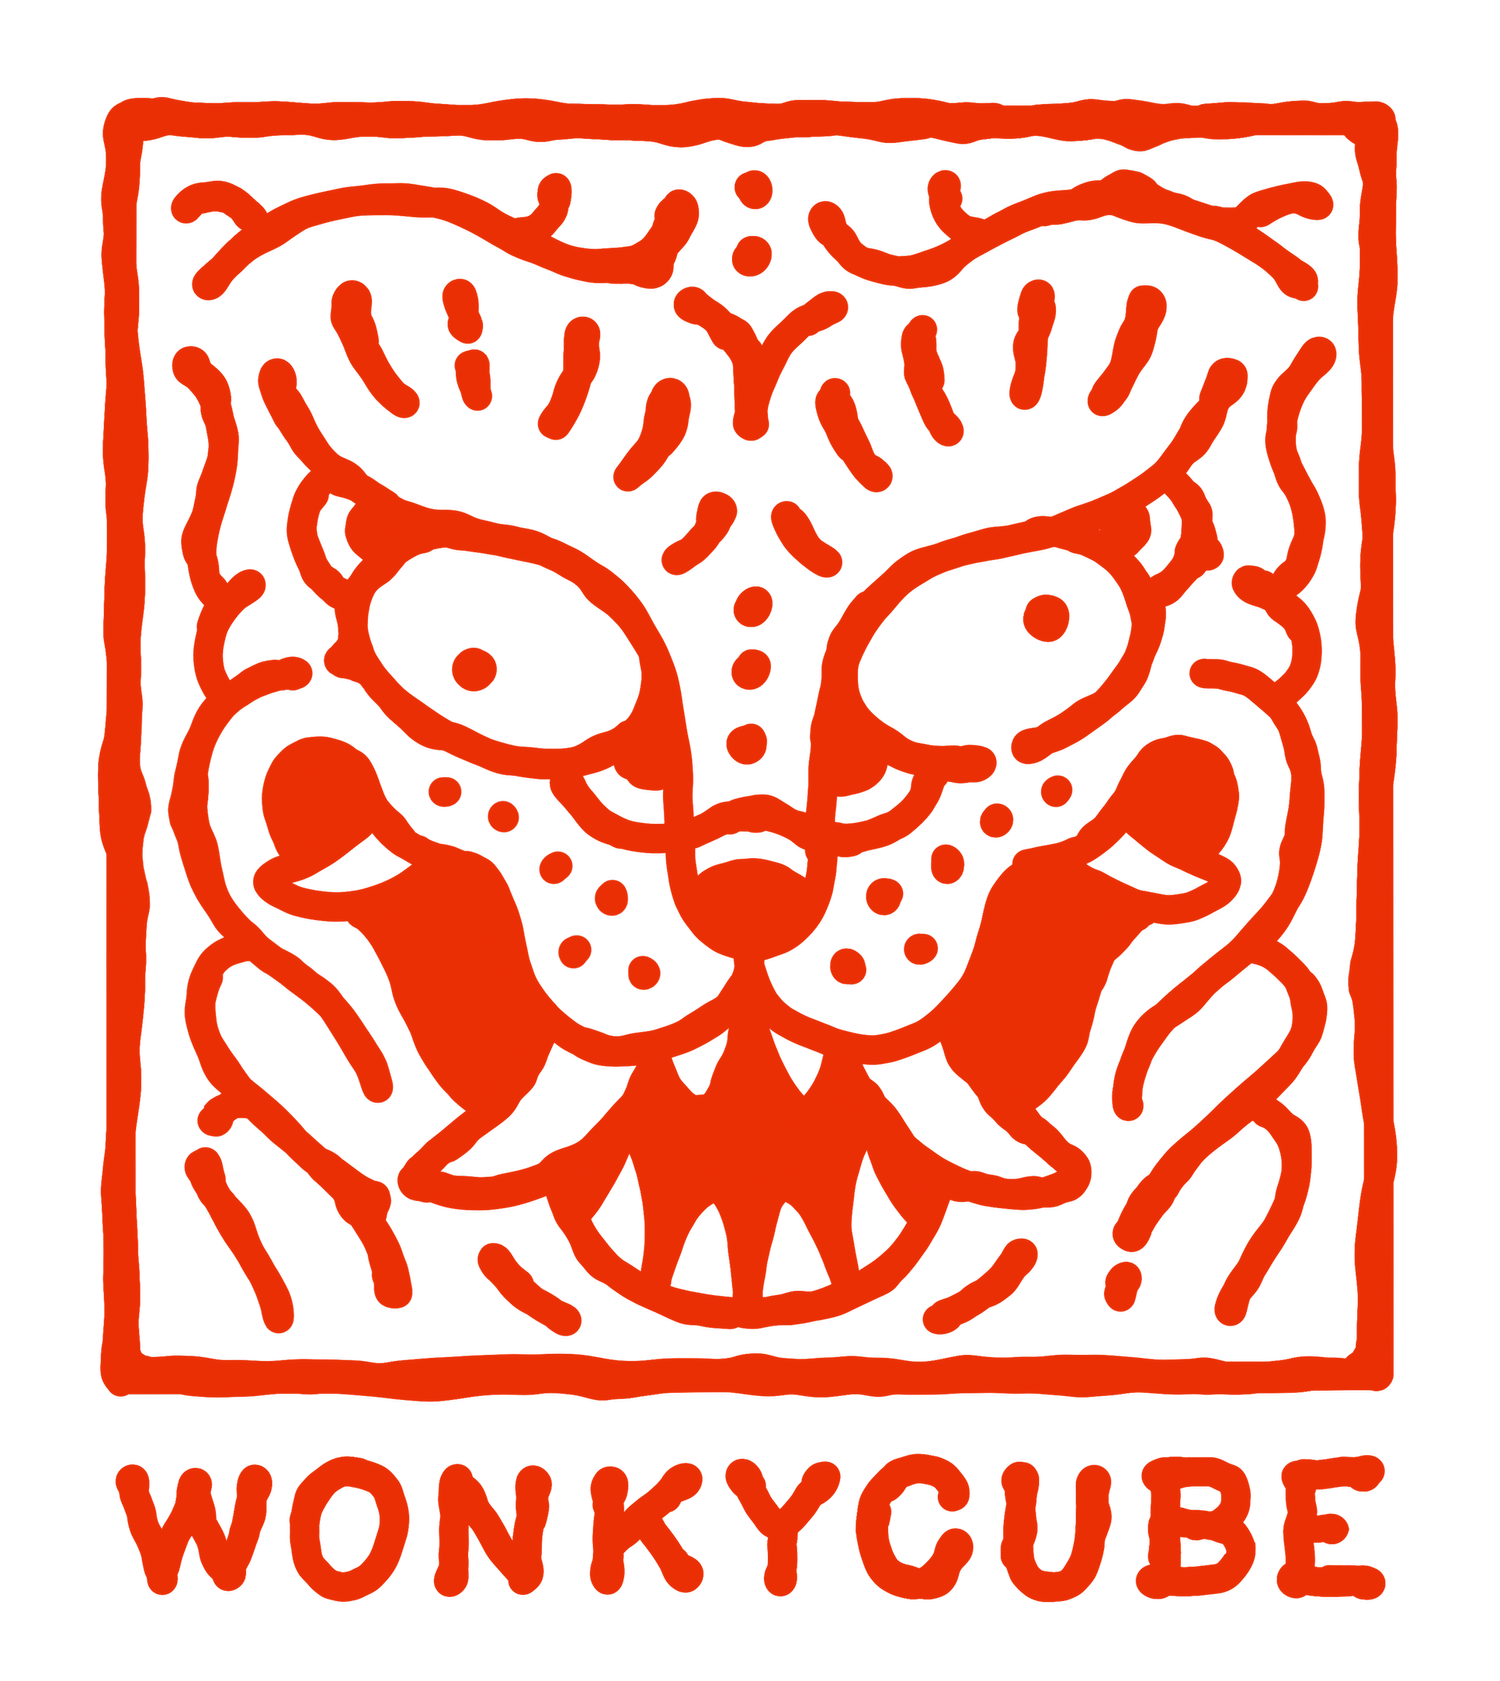 Wonkycube